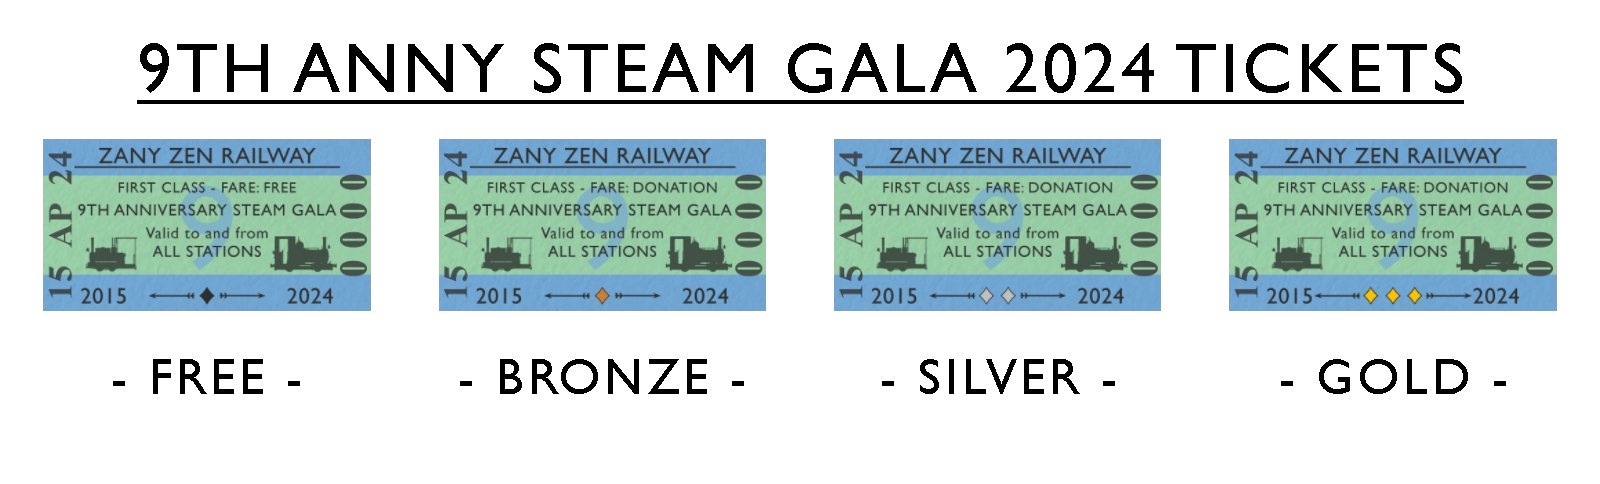 The Zany Zen Railway 9th Anniversary Steam Gala Ticket Preview